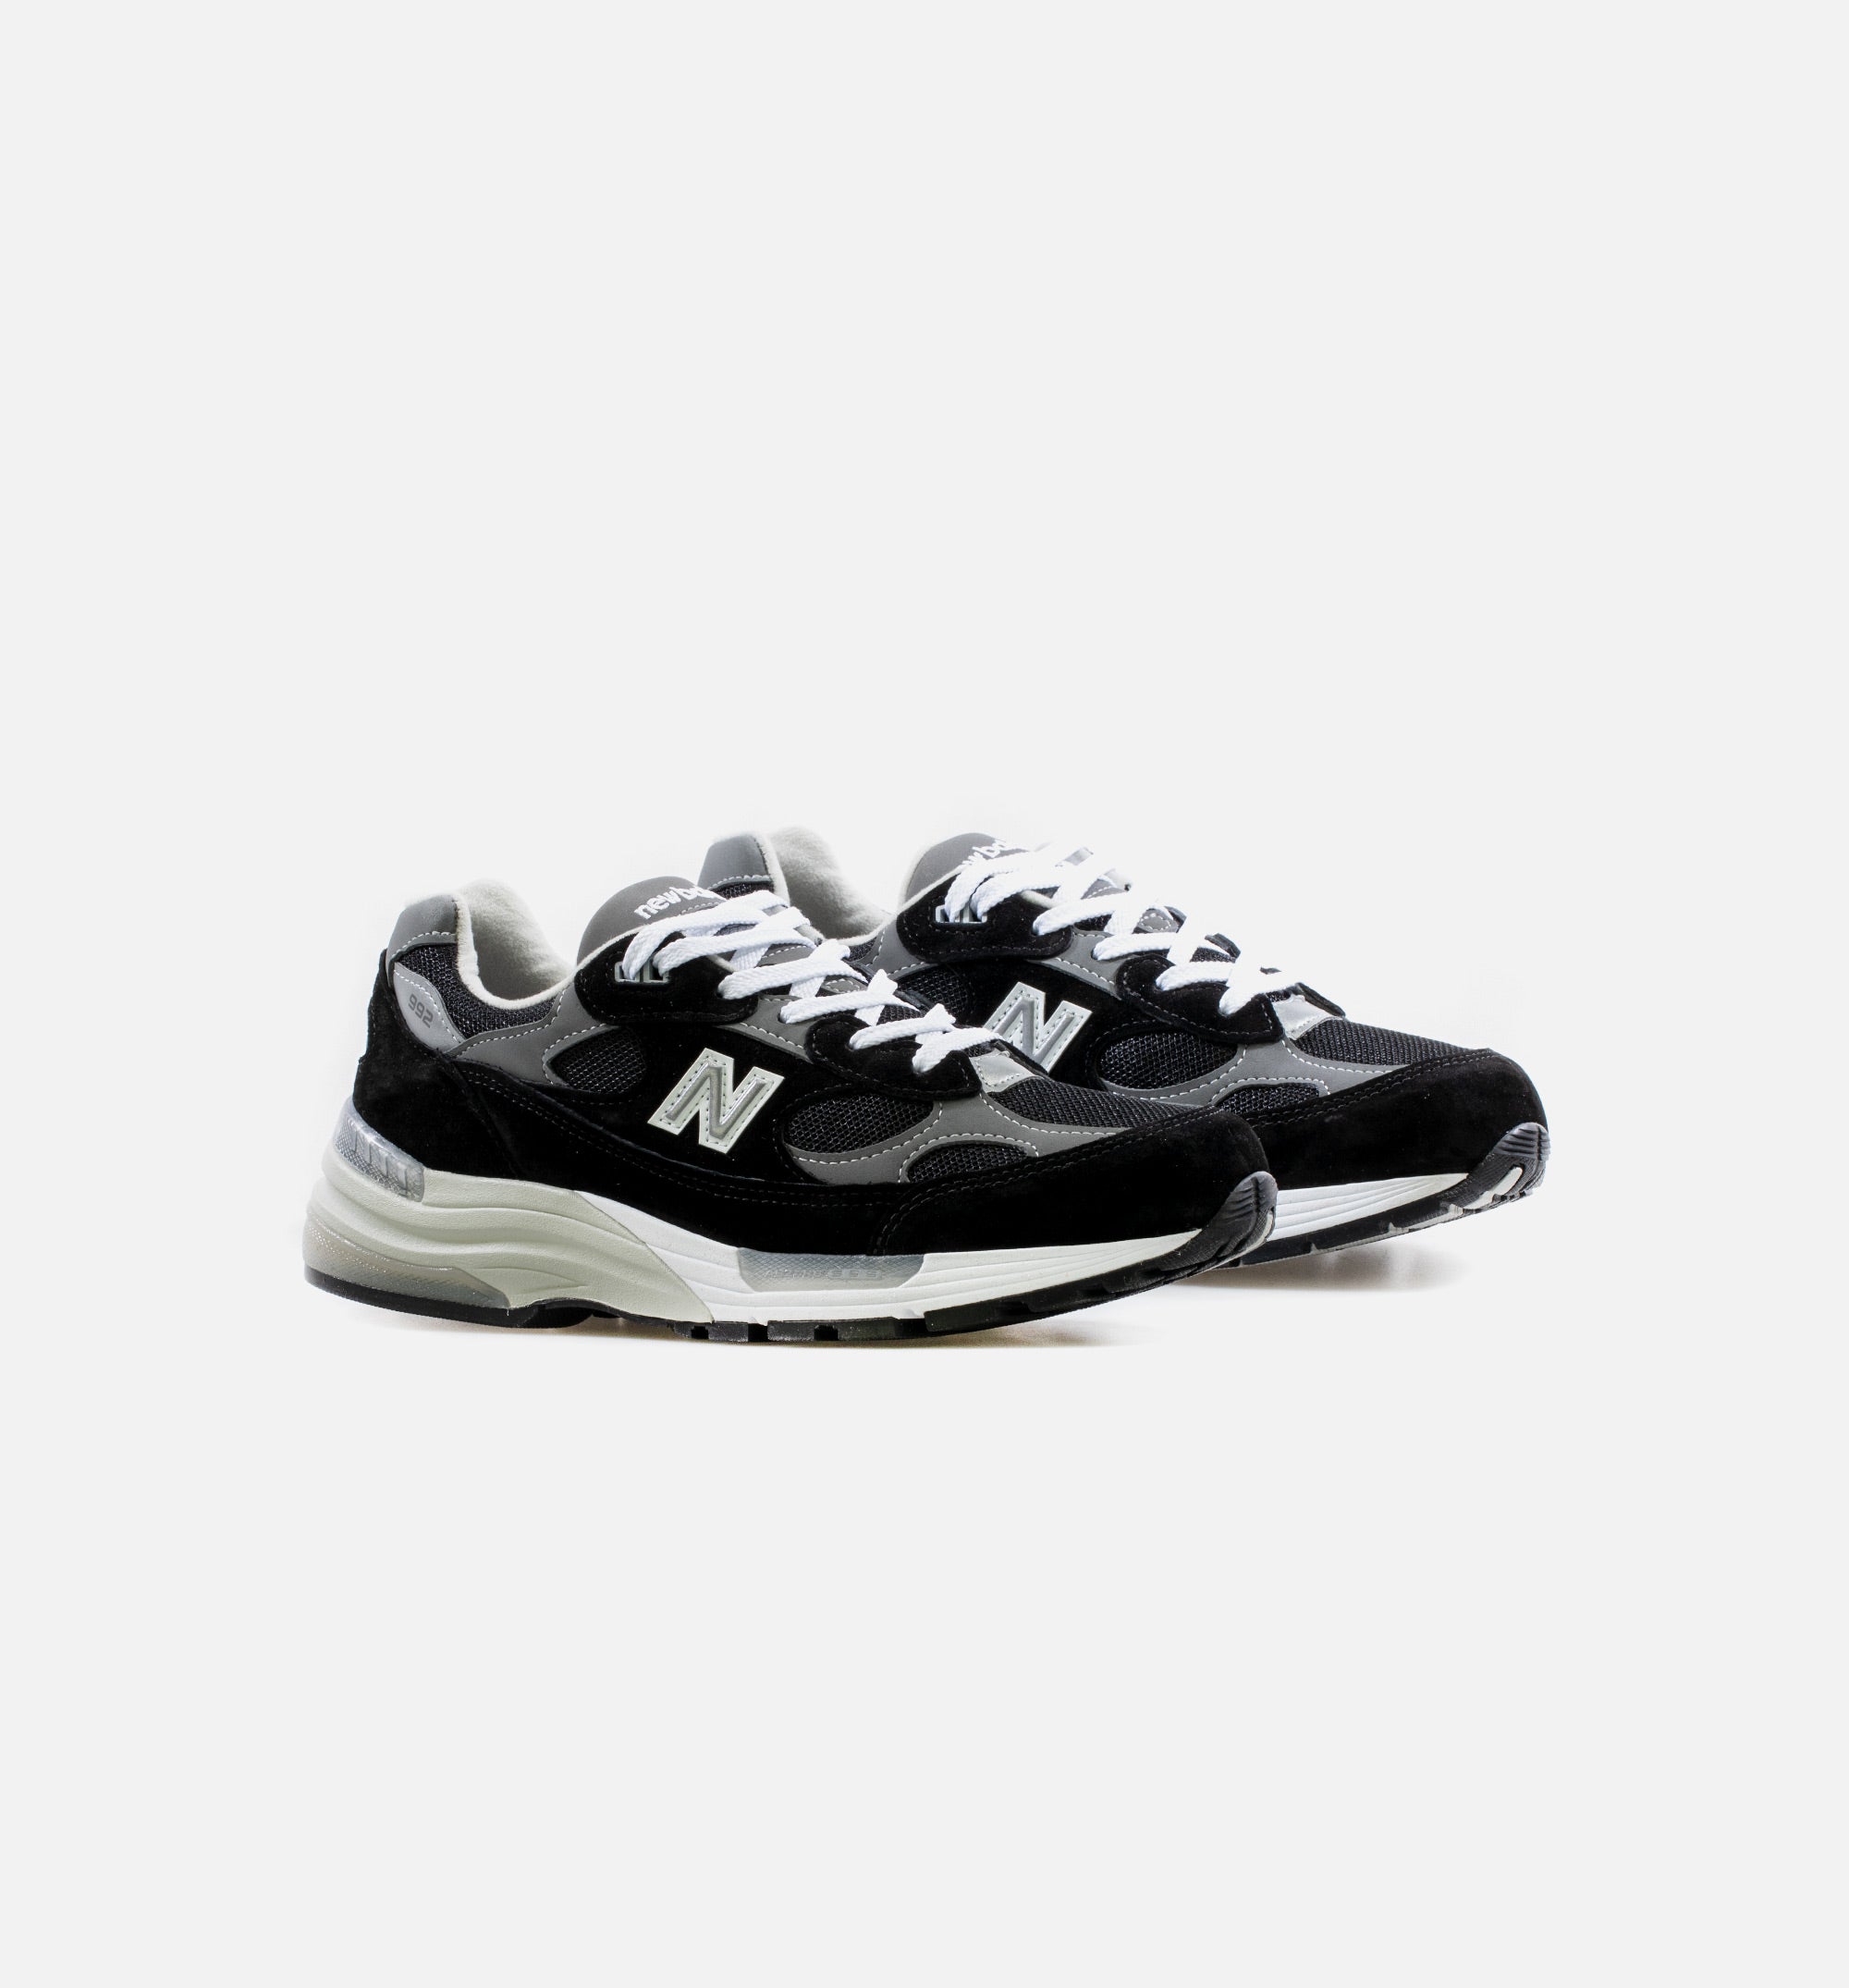 New Balance M992EB 992 Mens Lifestyle Shoe - Black/Grey